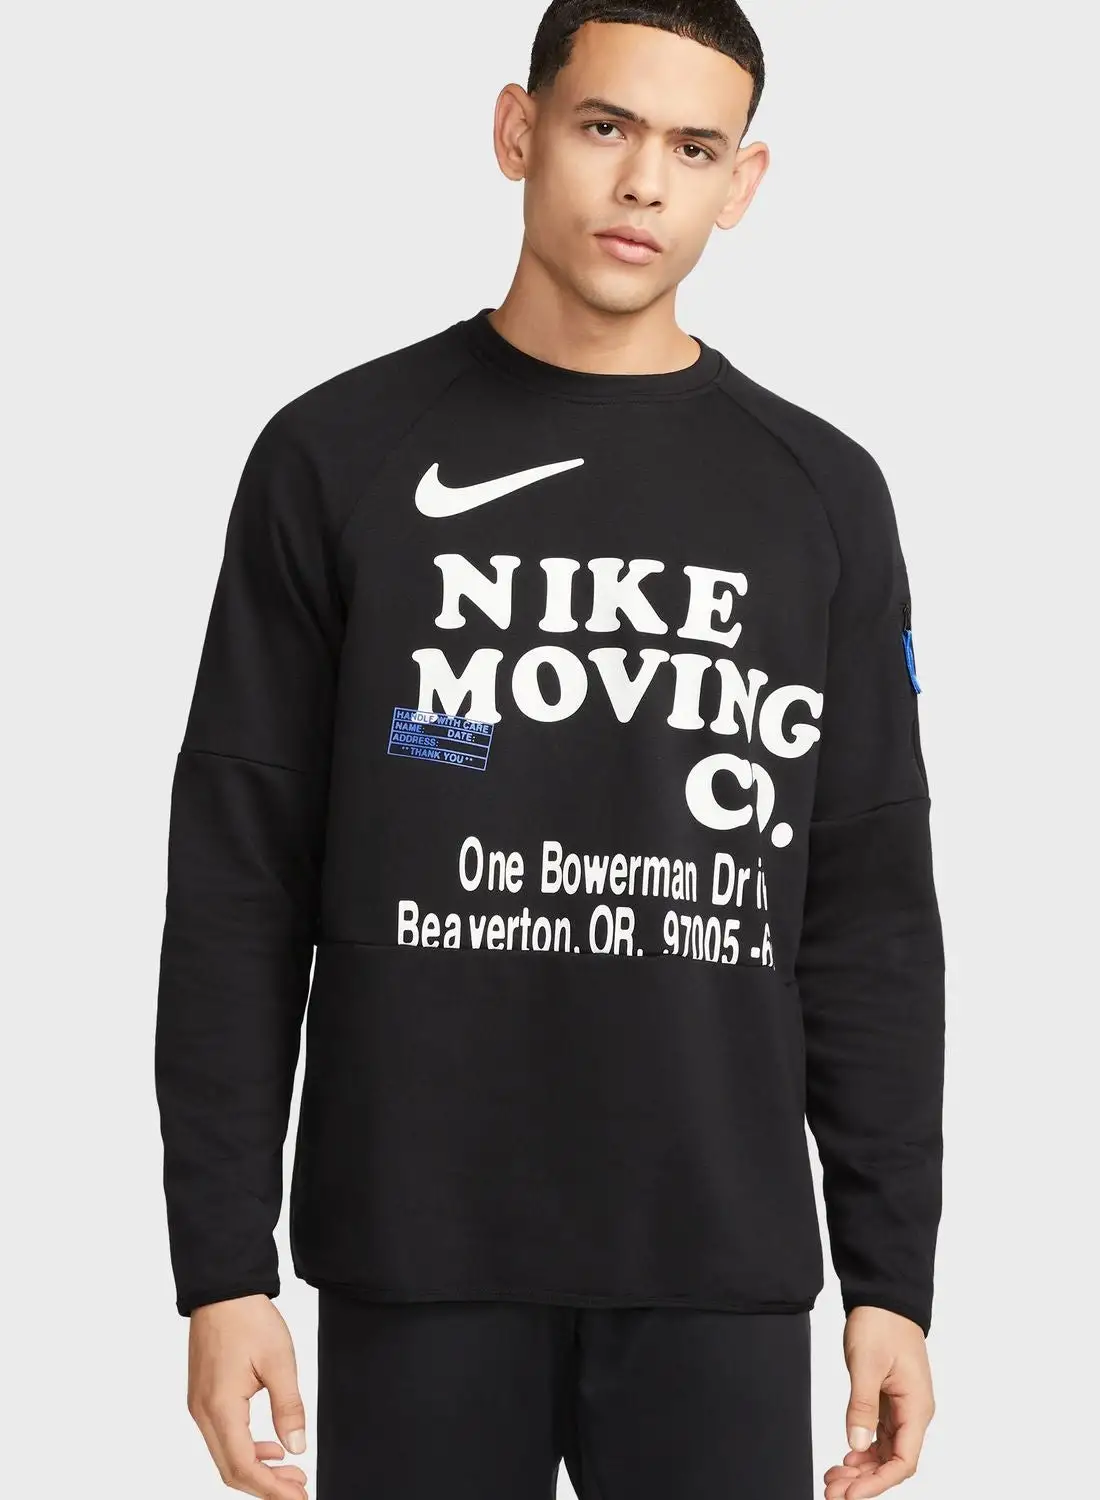 Nike Dri-Fit Moving Top